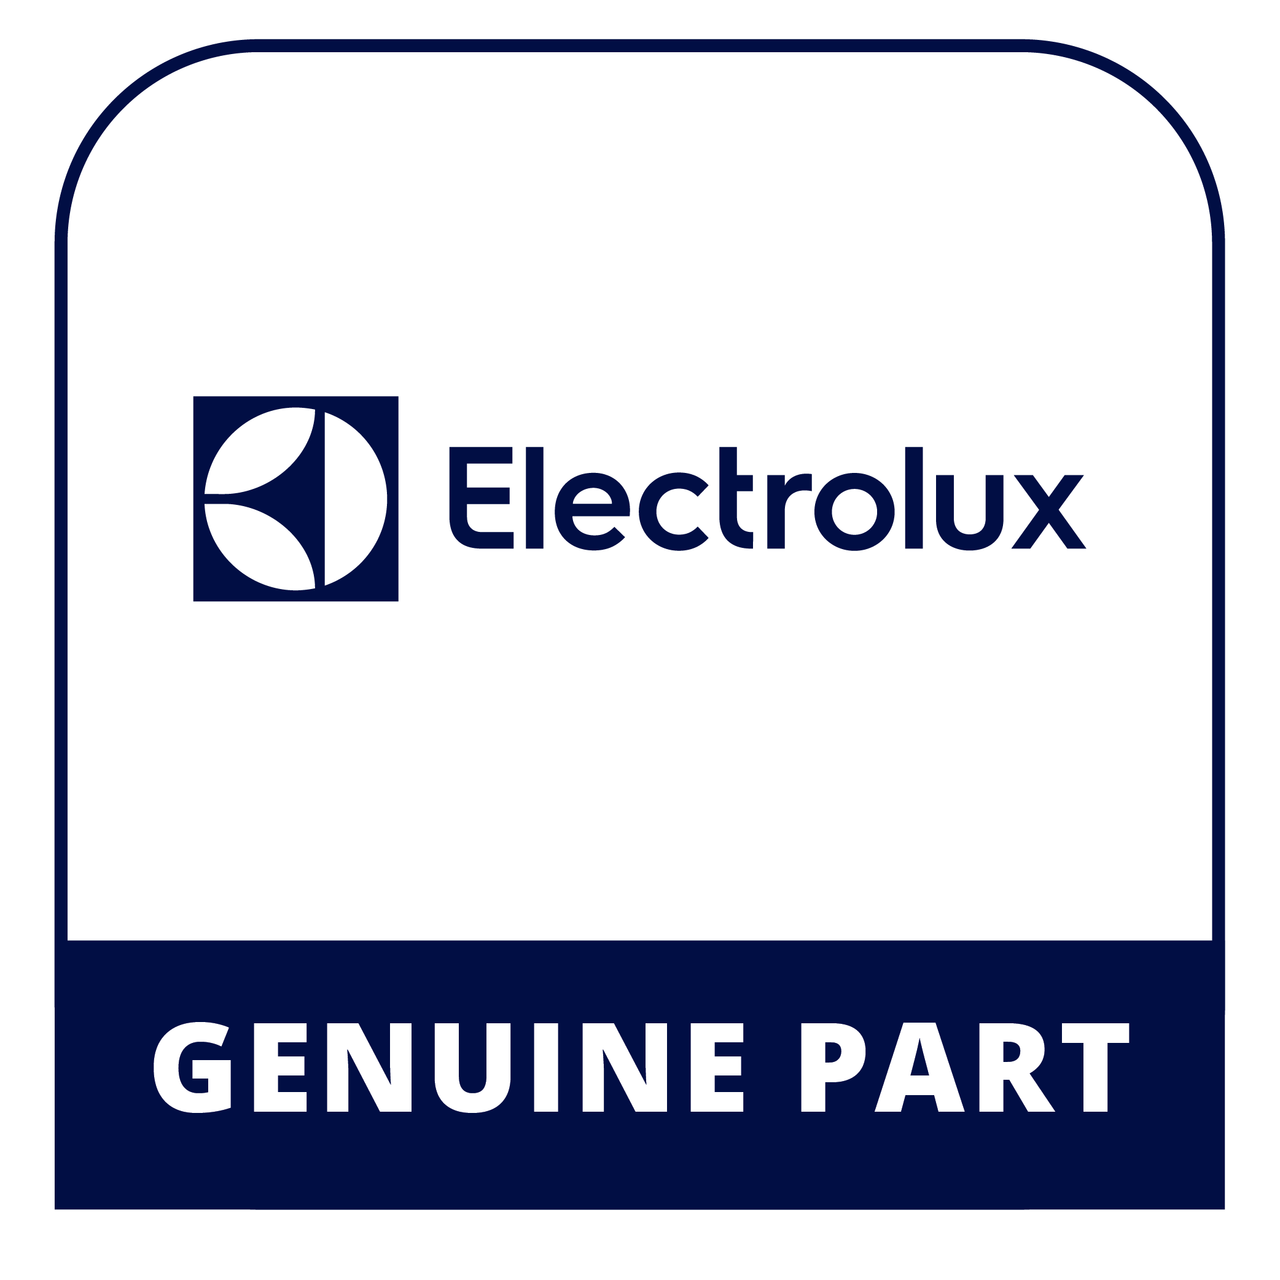 Frigidaire - Electrolux 154553501 Gasket - Genuine Electrolux Part